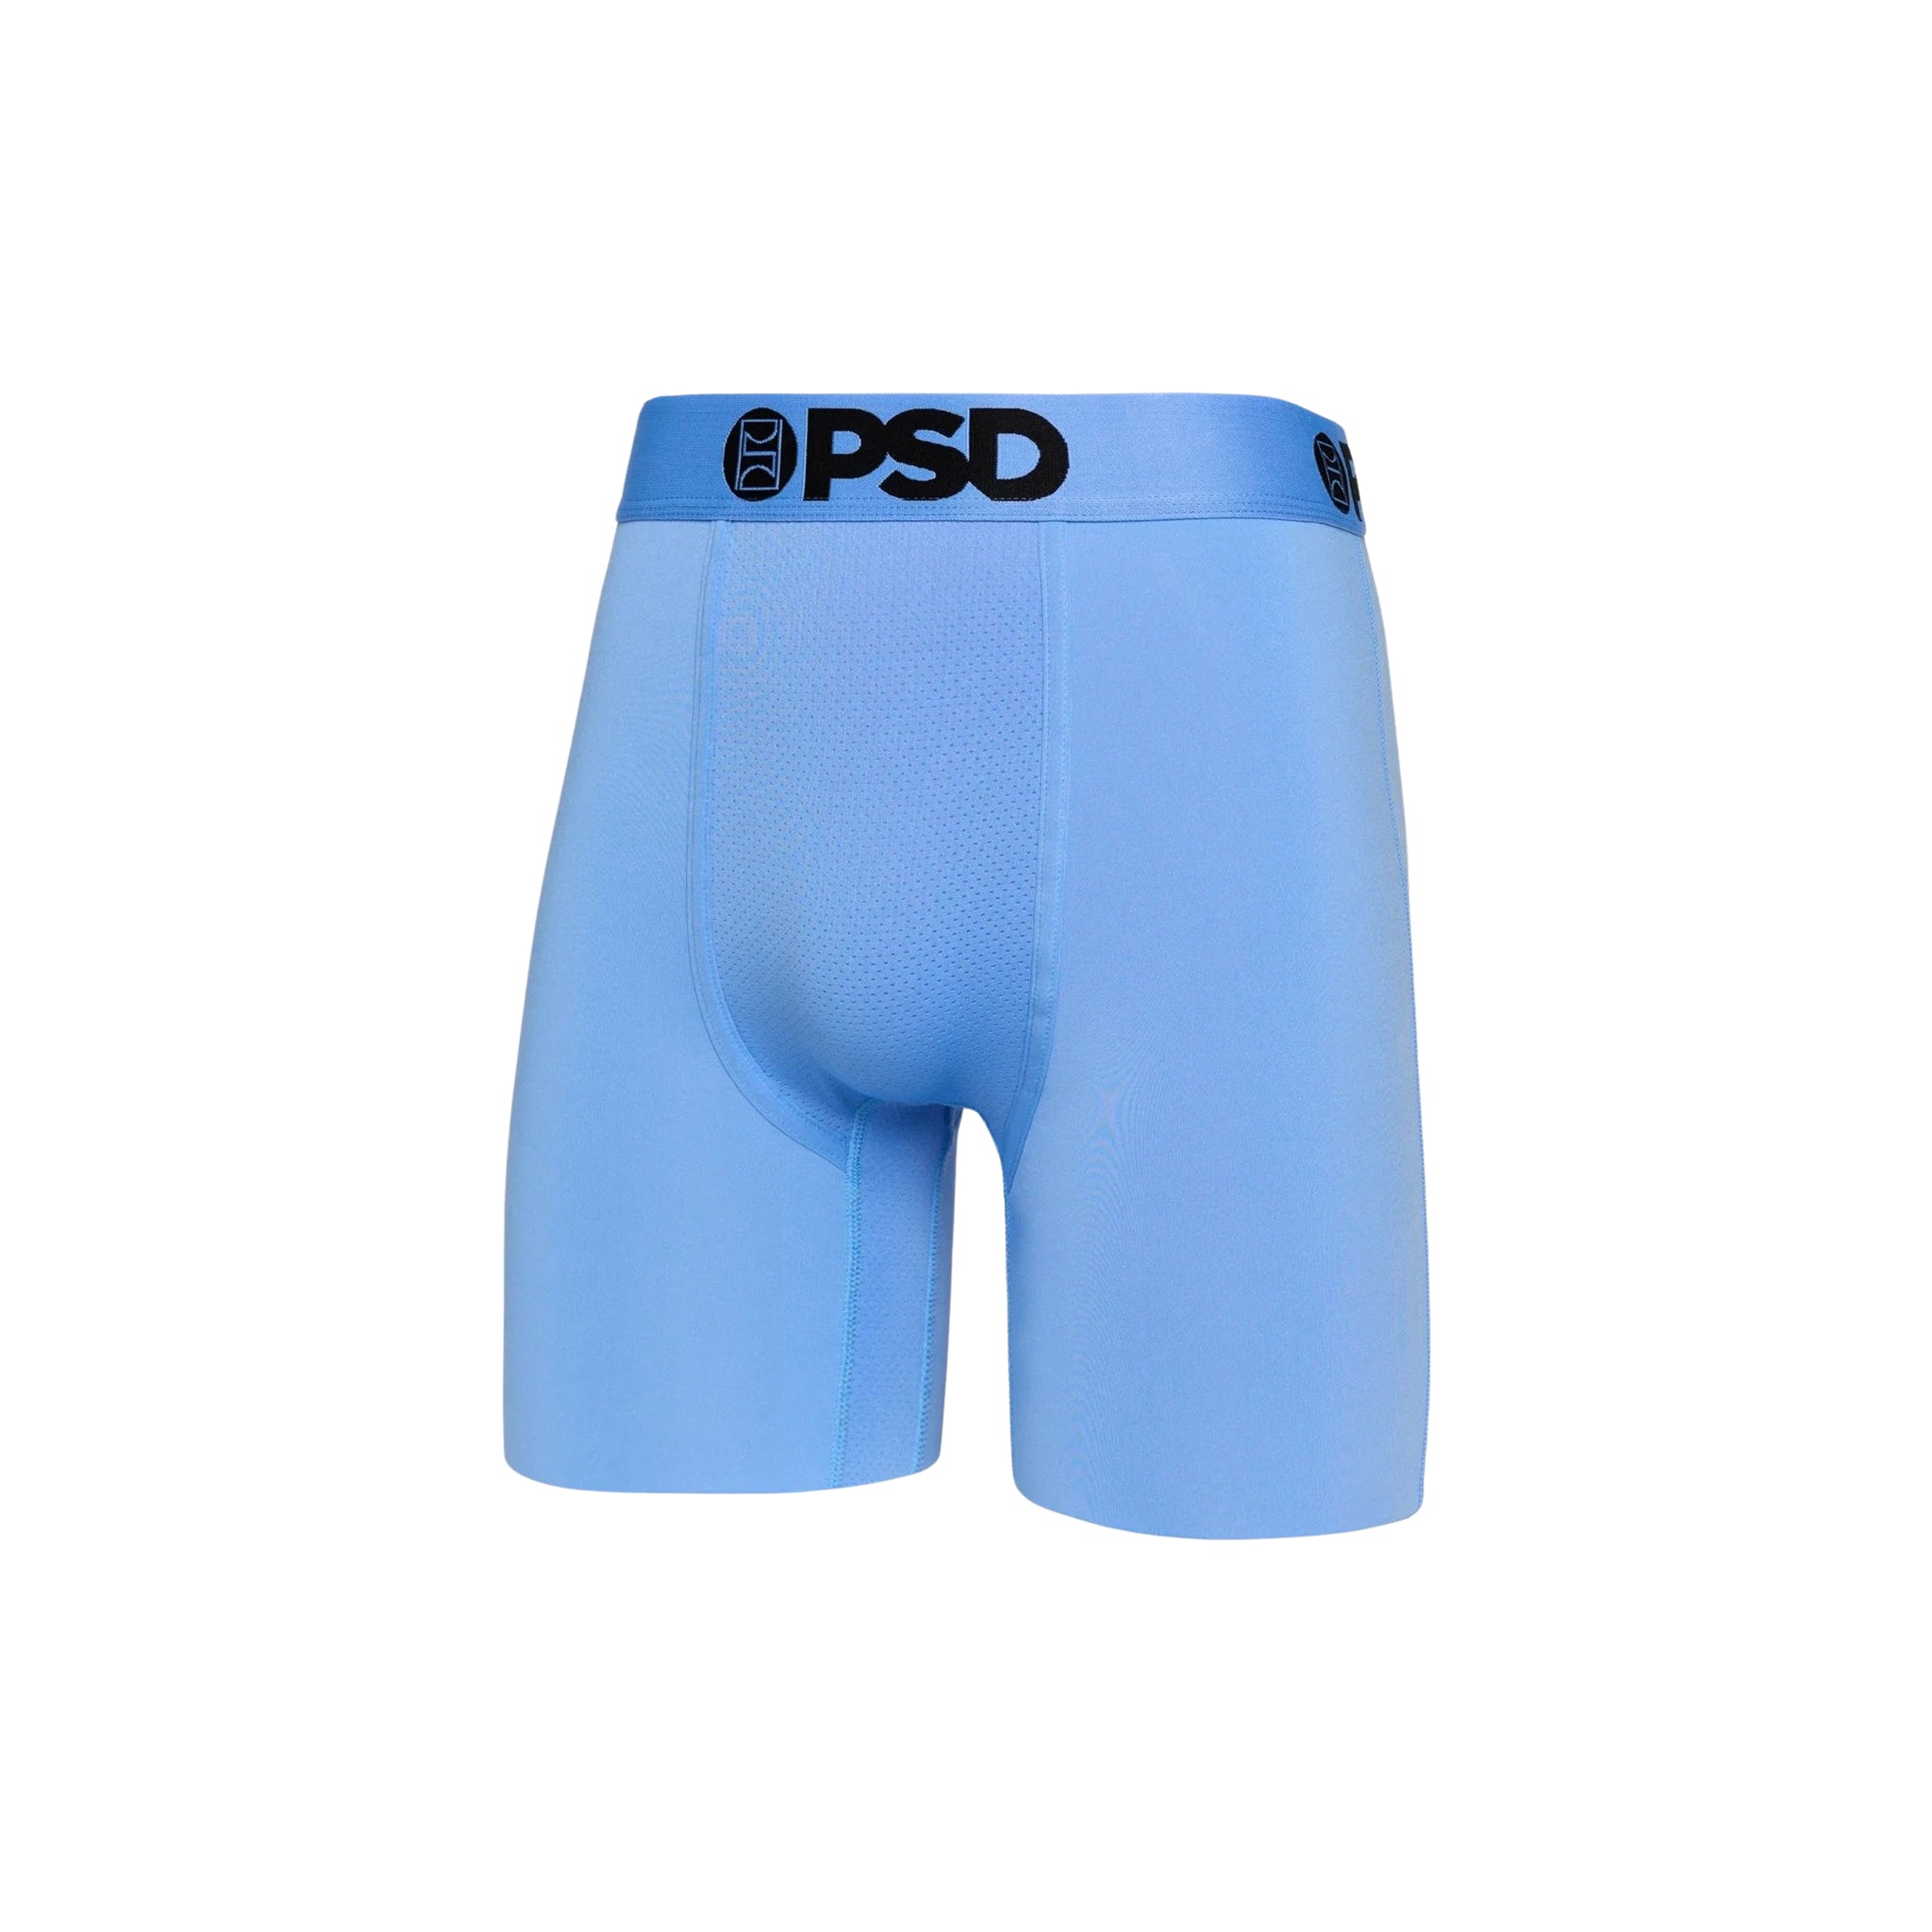 PSD "NC BLUE SLD" Underwear